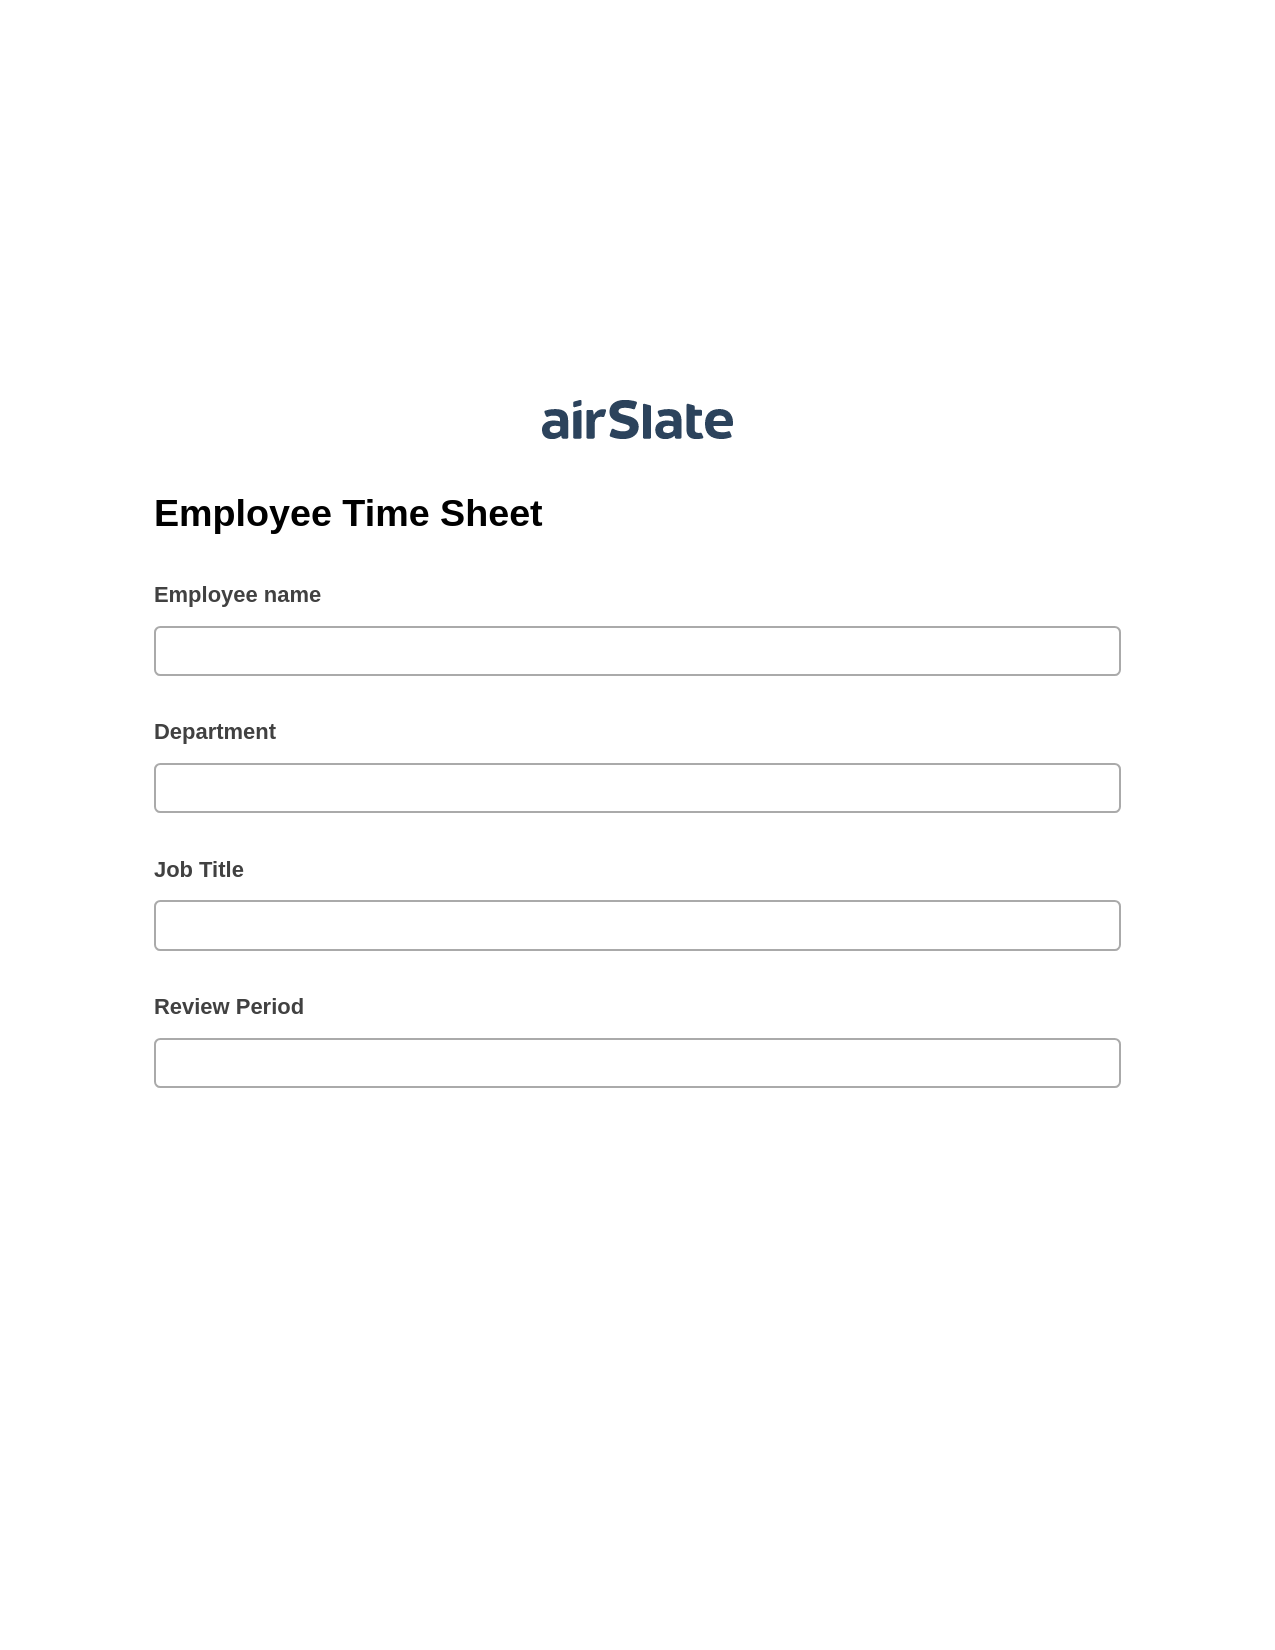 Multirole Employee Time Sheet Pre-fill Dropdowns from MySQL Bot, Remove Slate Bot, Export to Smartsheet